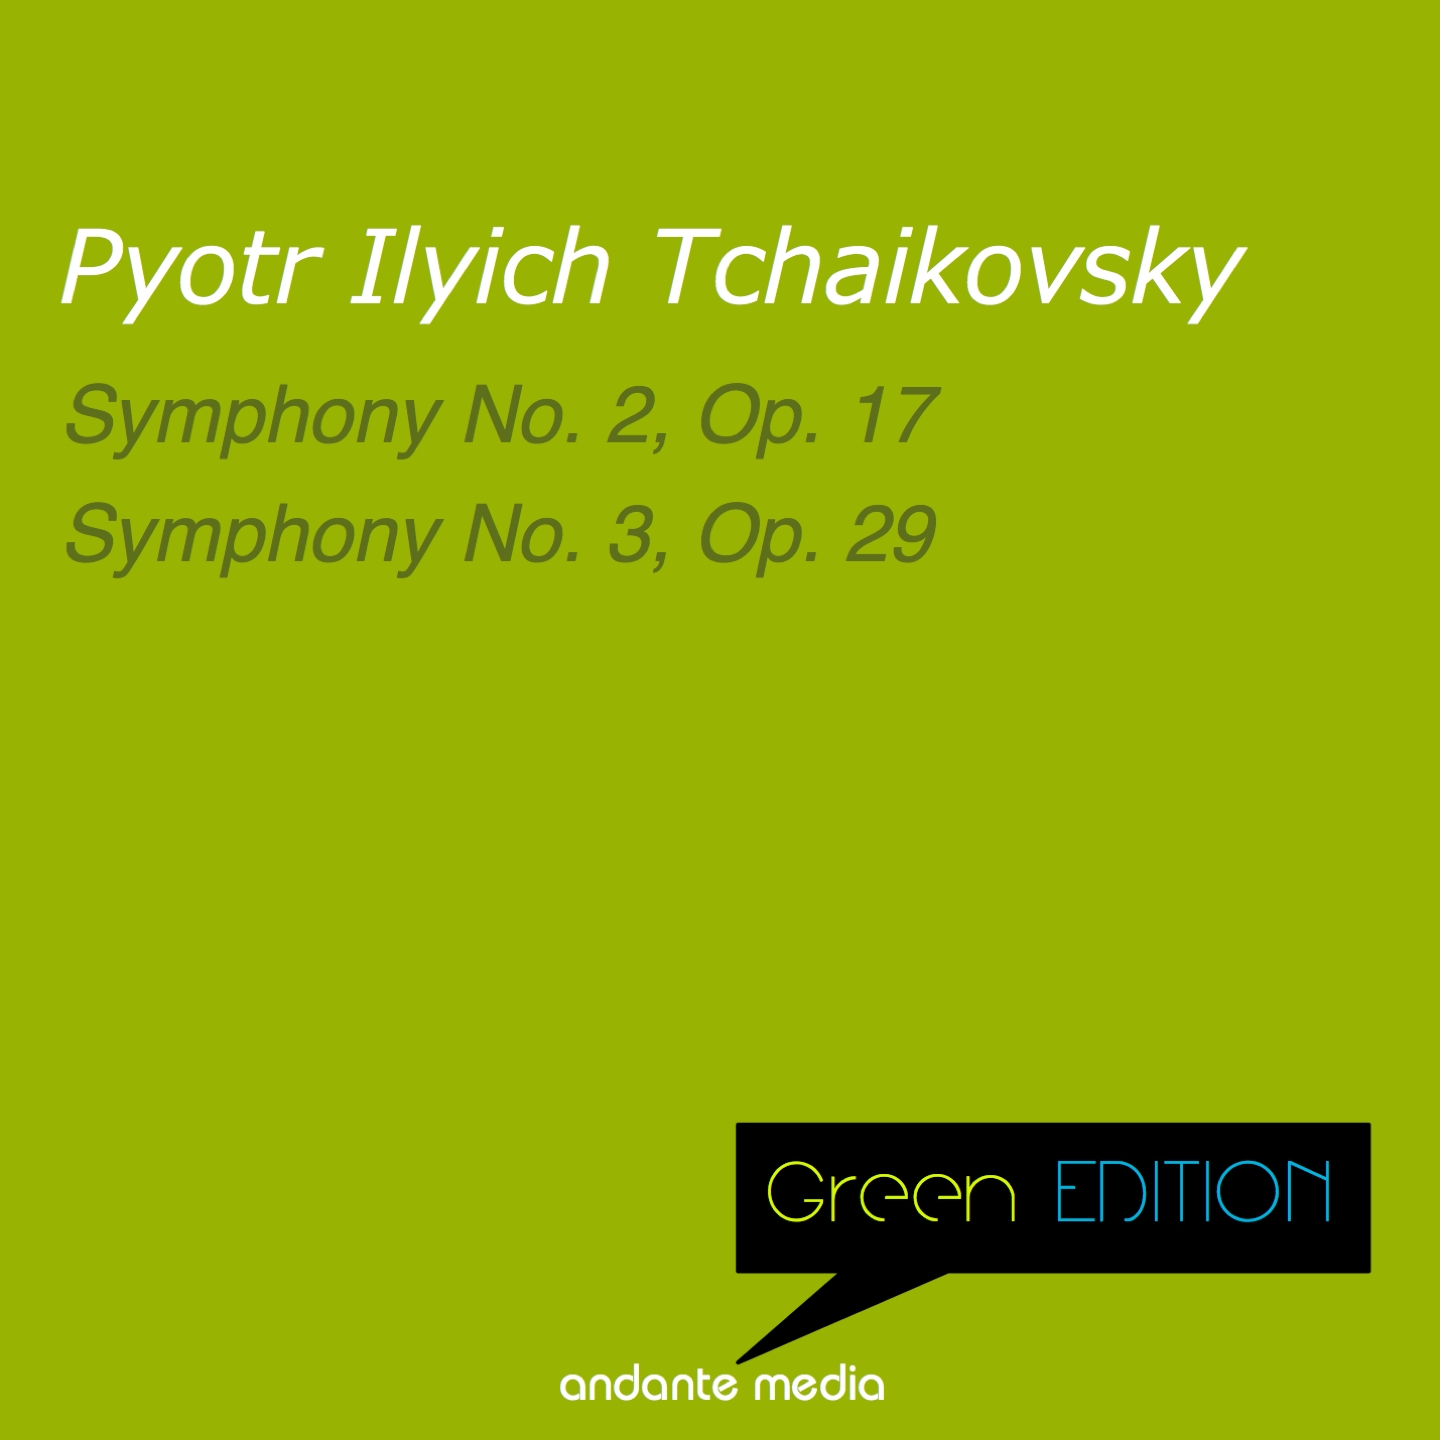 Symphony No. 3 in D Major, Op. 29, TH 26 "Polish": II. Alla tedesca. Allegro moderato e semplice